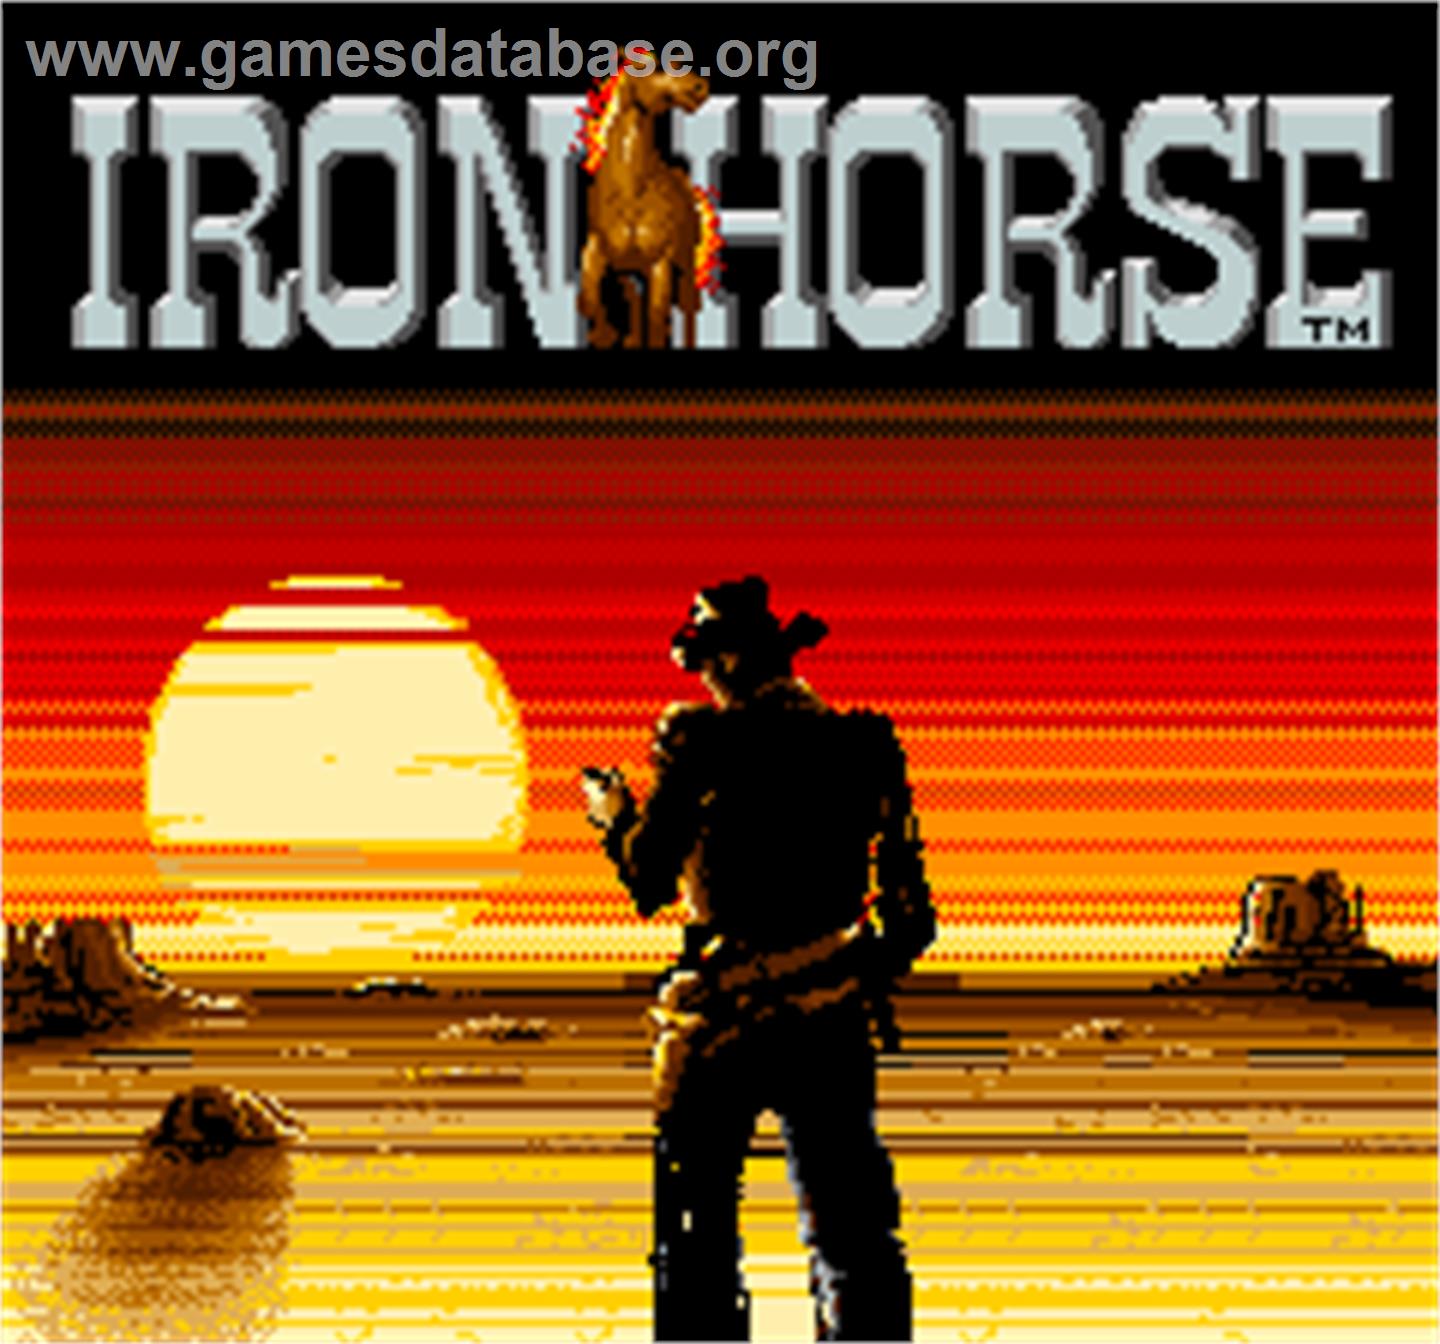 Iron Horse - Arcade - Artwork - Title Screen